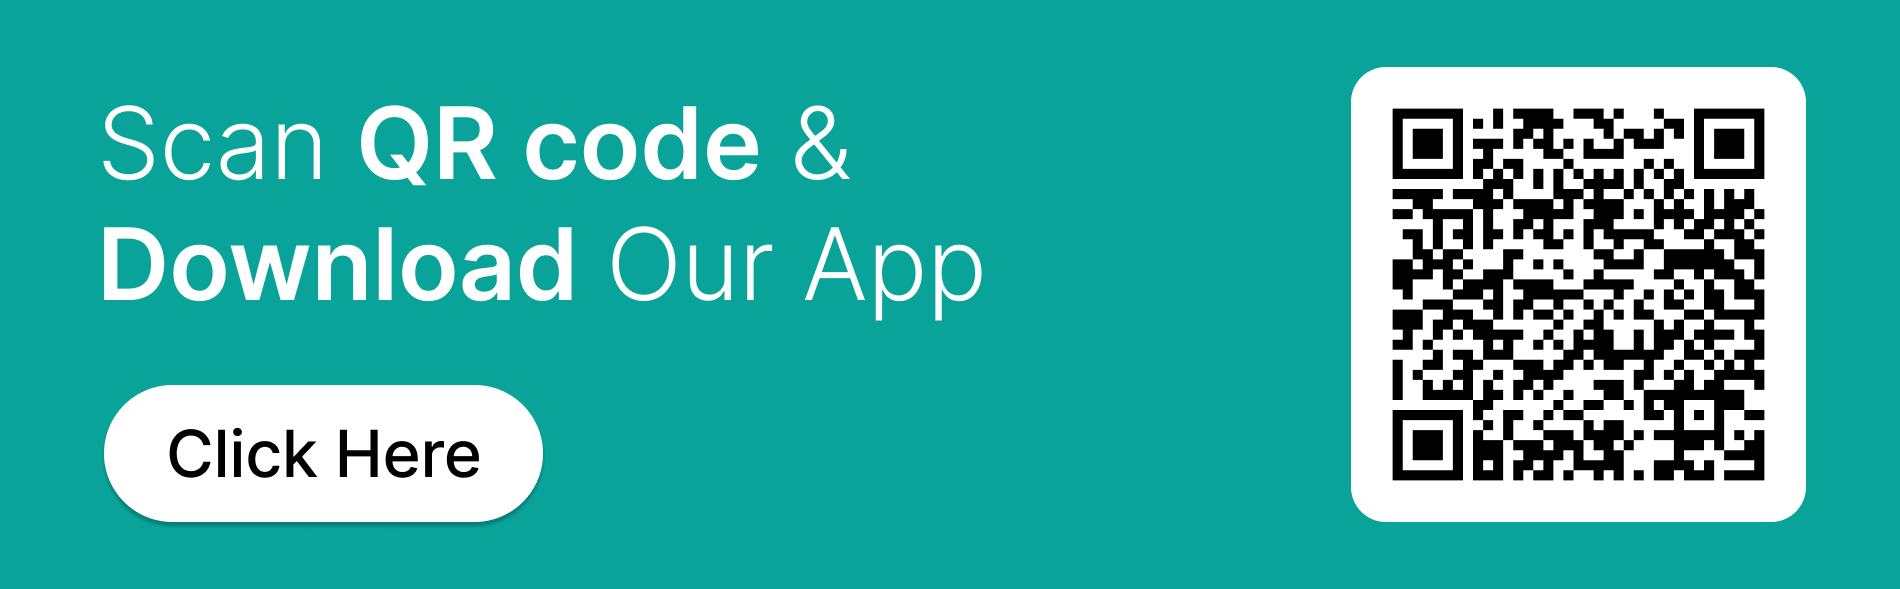 ShopU Ecommerce App | iOS/Android - Flutter UI Kit - 1